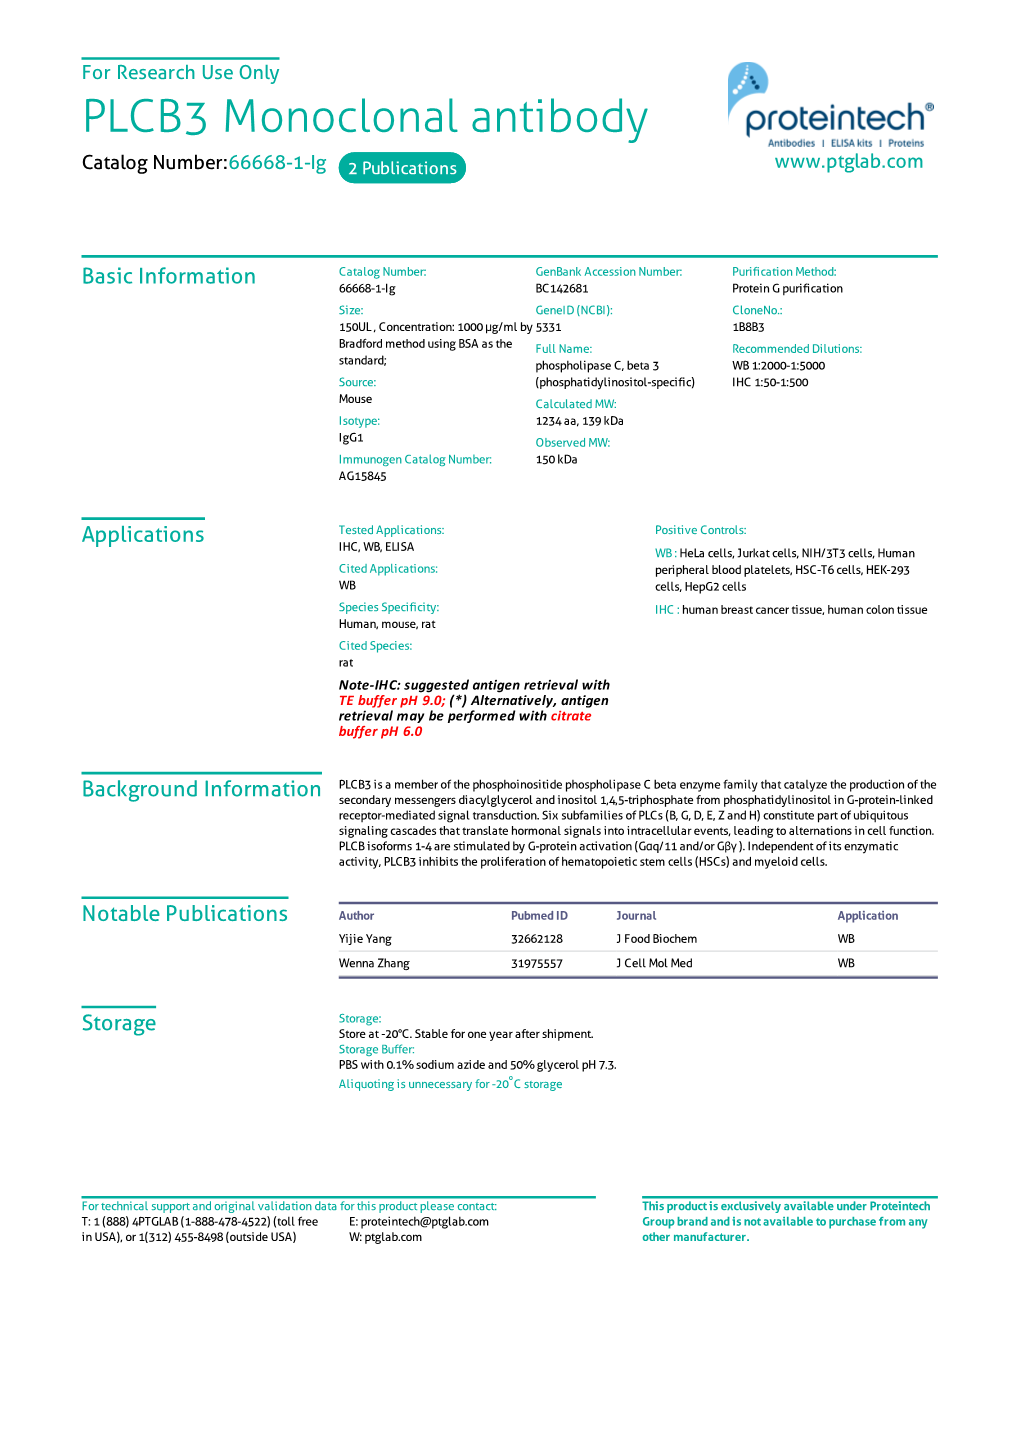 PLCB3 Monoclonal Antibody Catalog Number:66668-1-Ig 2 Publications